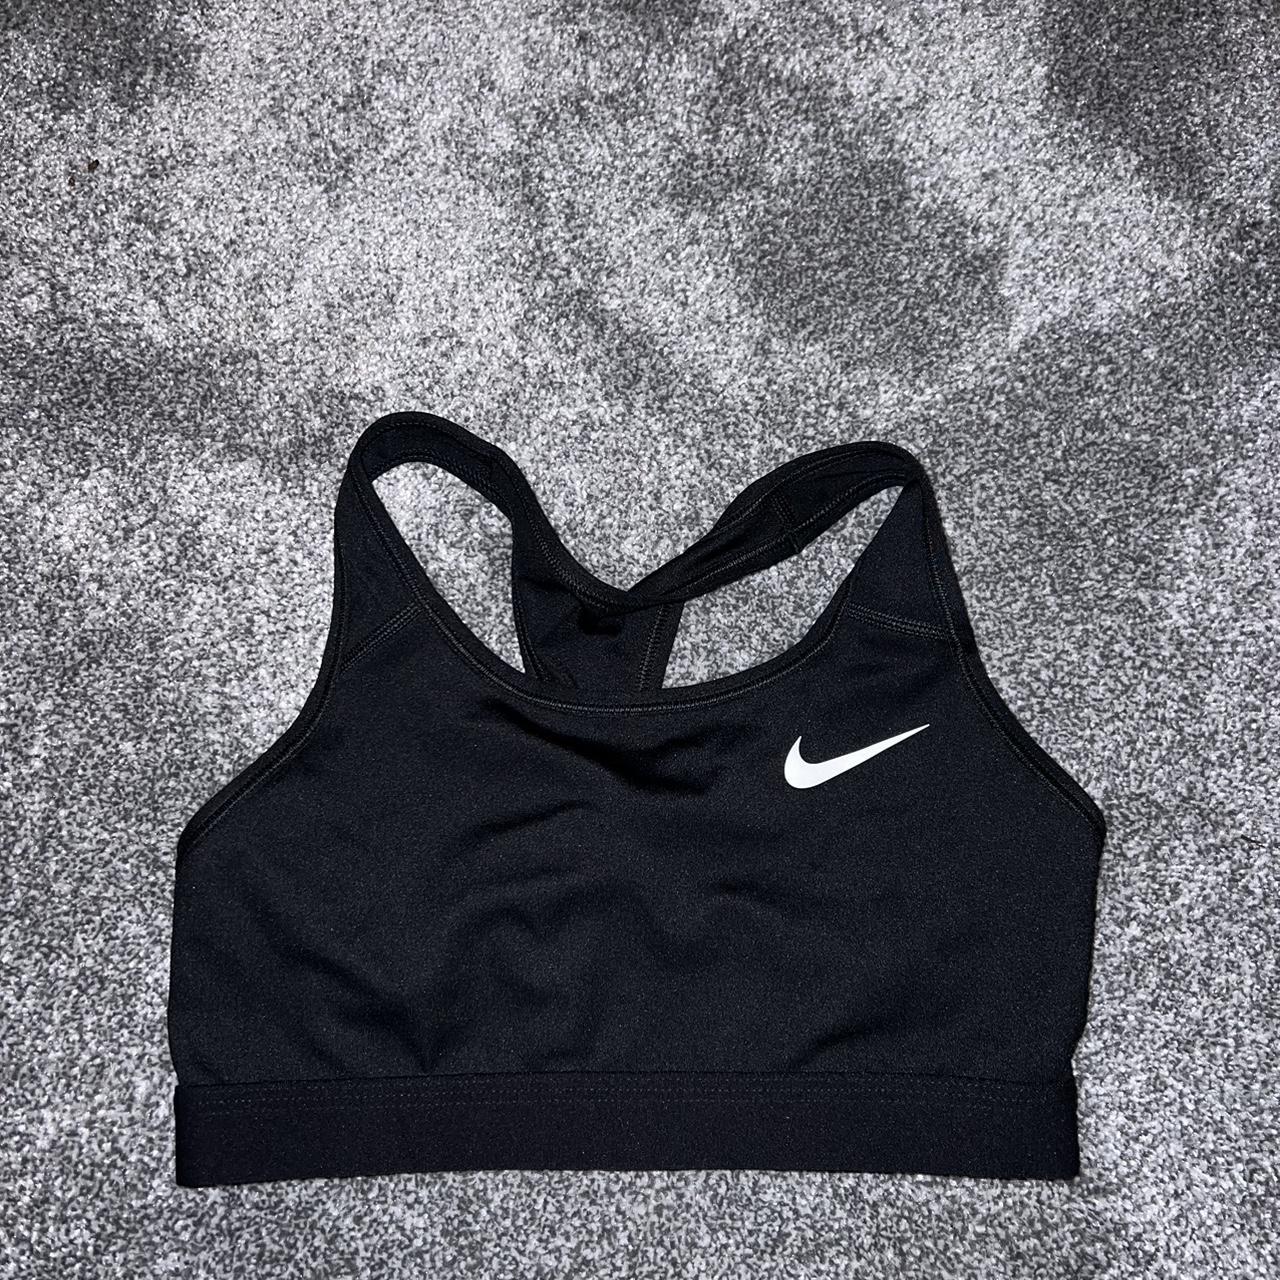 Black Nike Sports Bra - Size Small